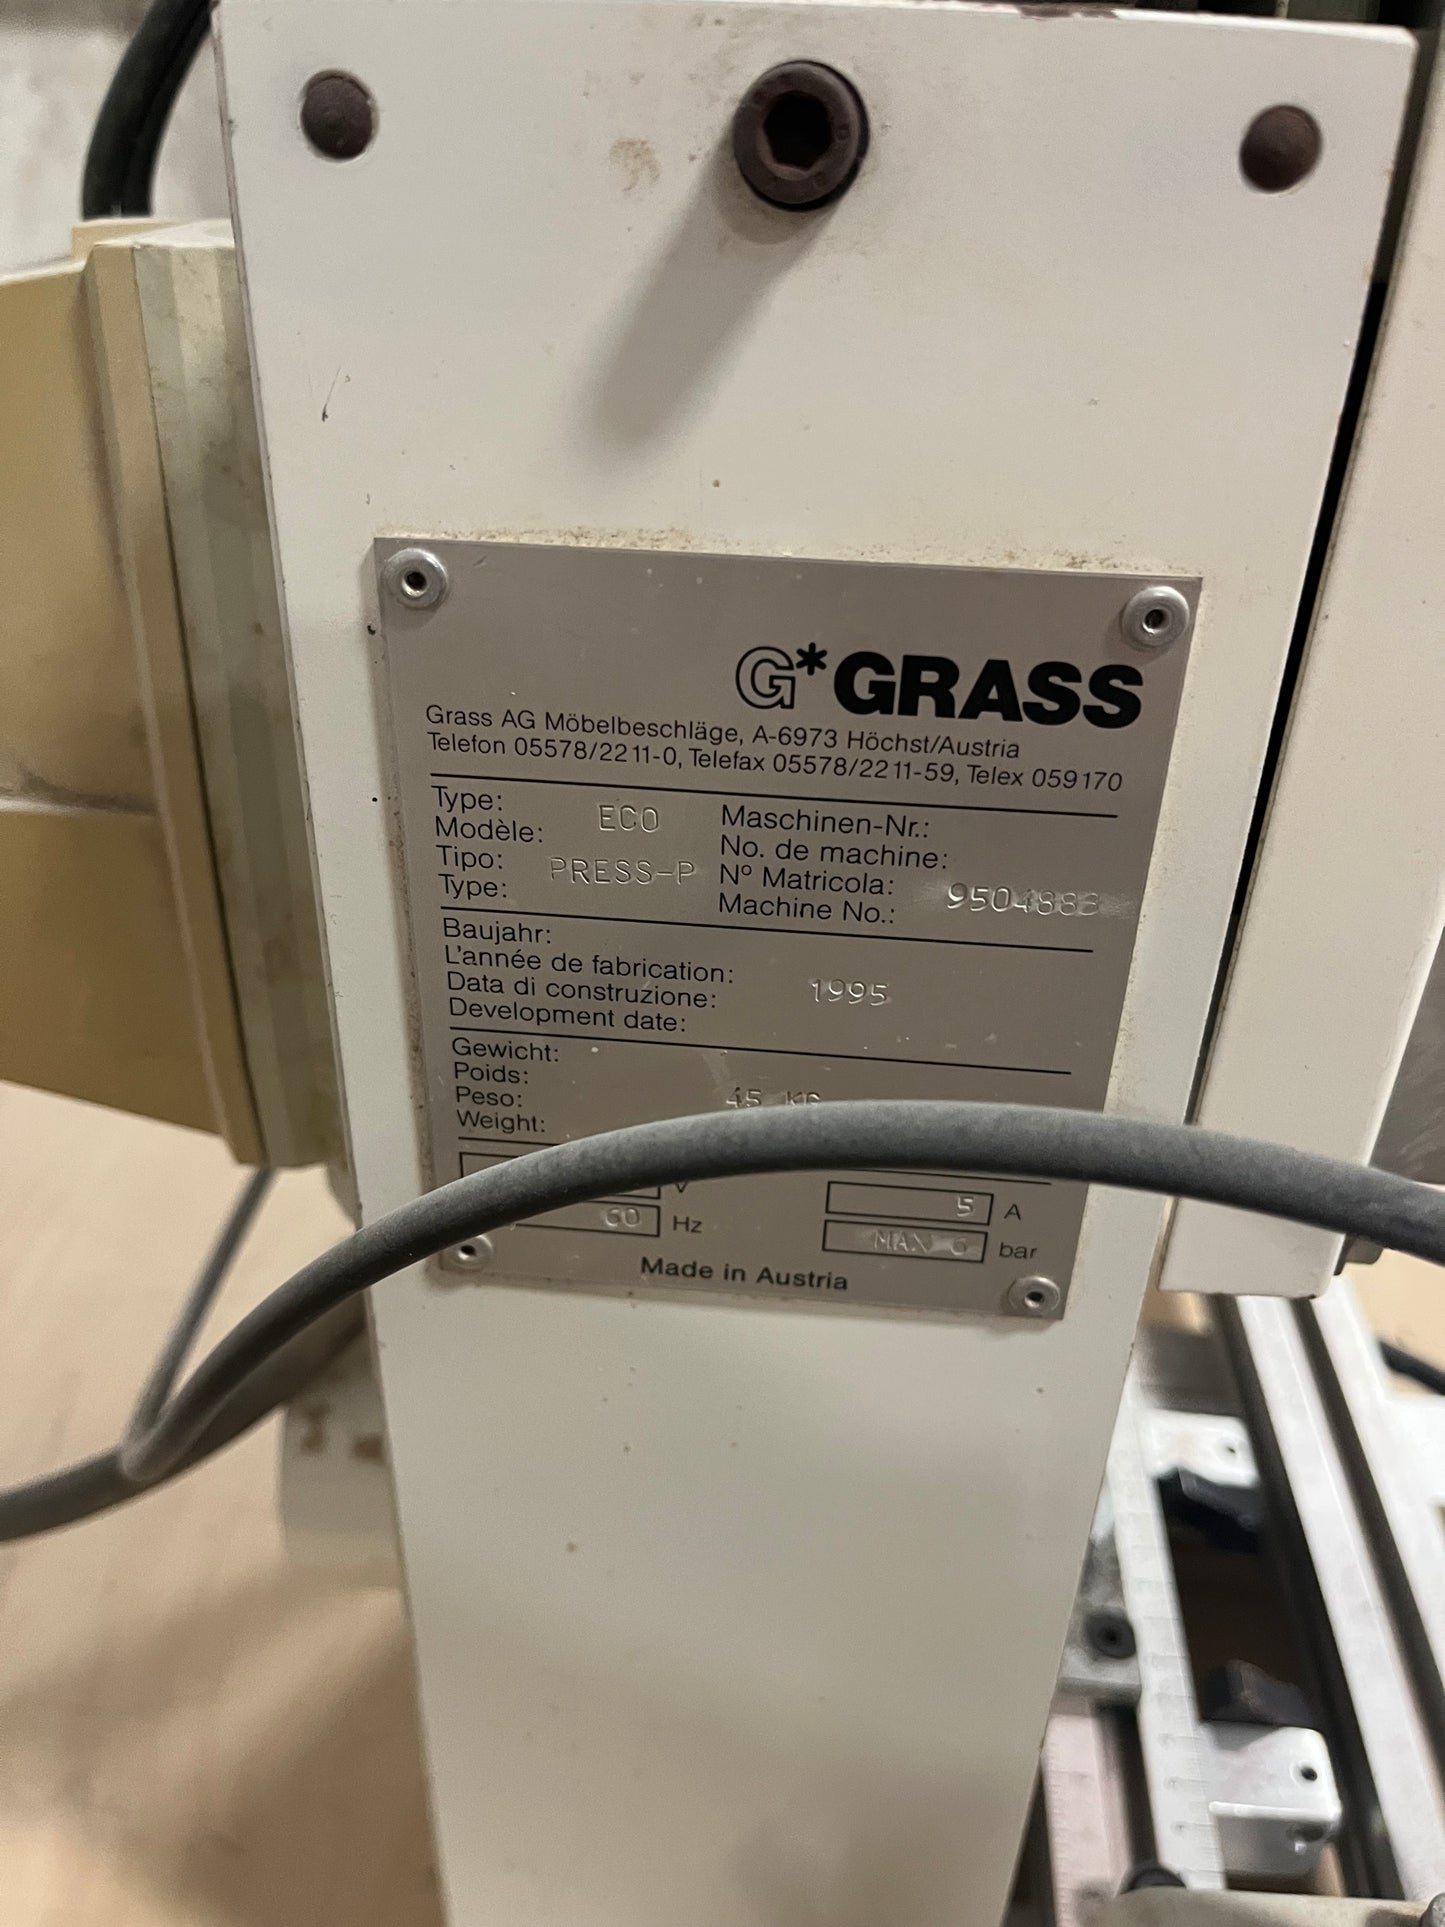 Grass Eco Press-P Hinge Boring and Insertion Machine - Ohio